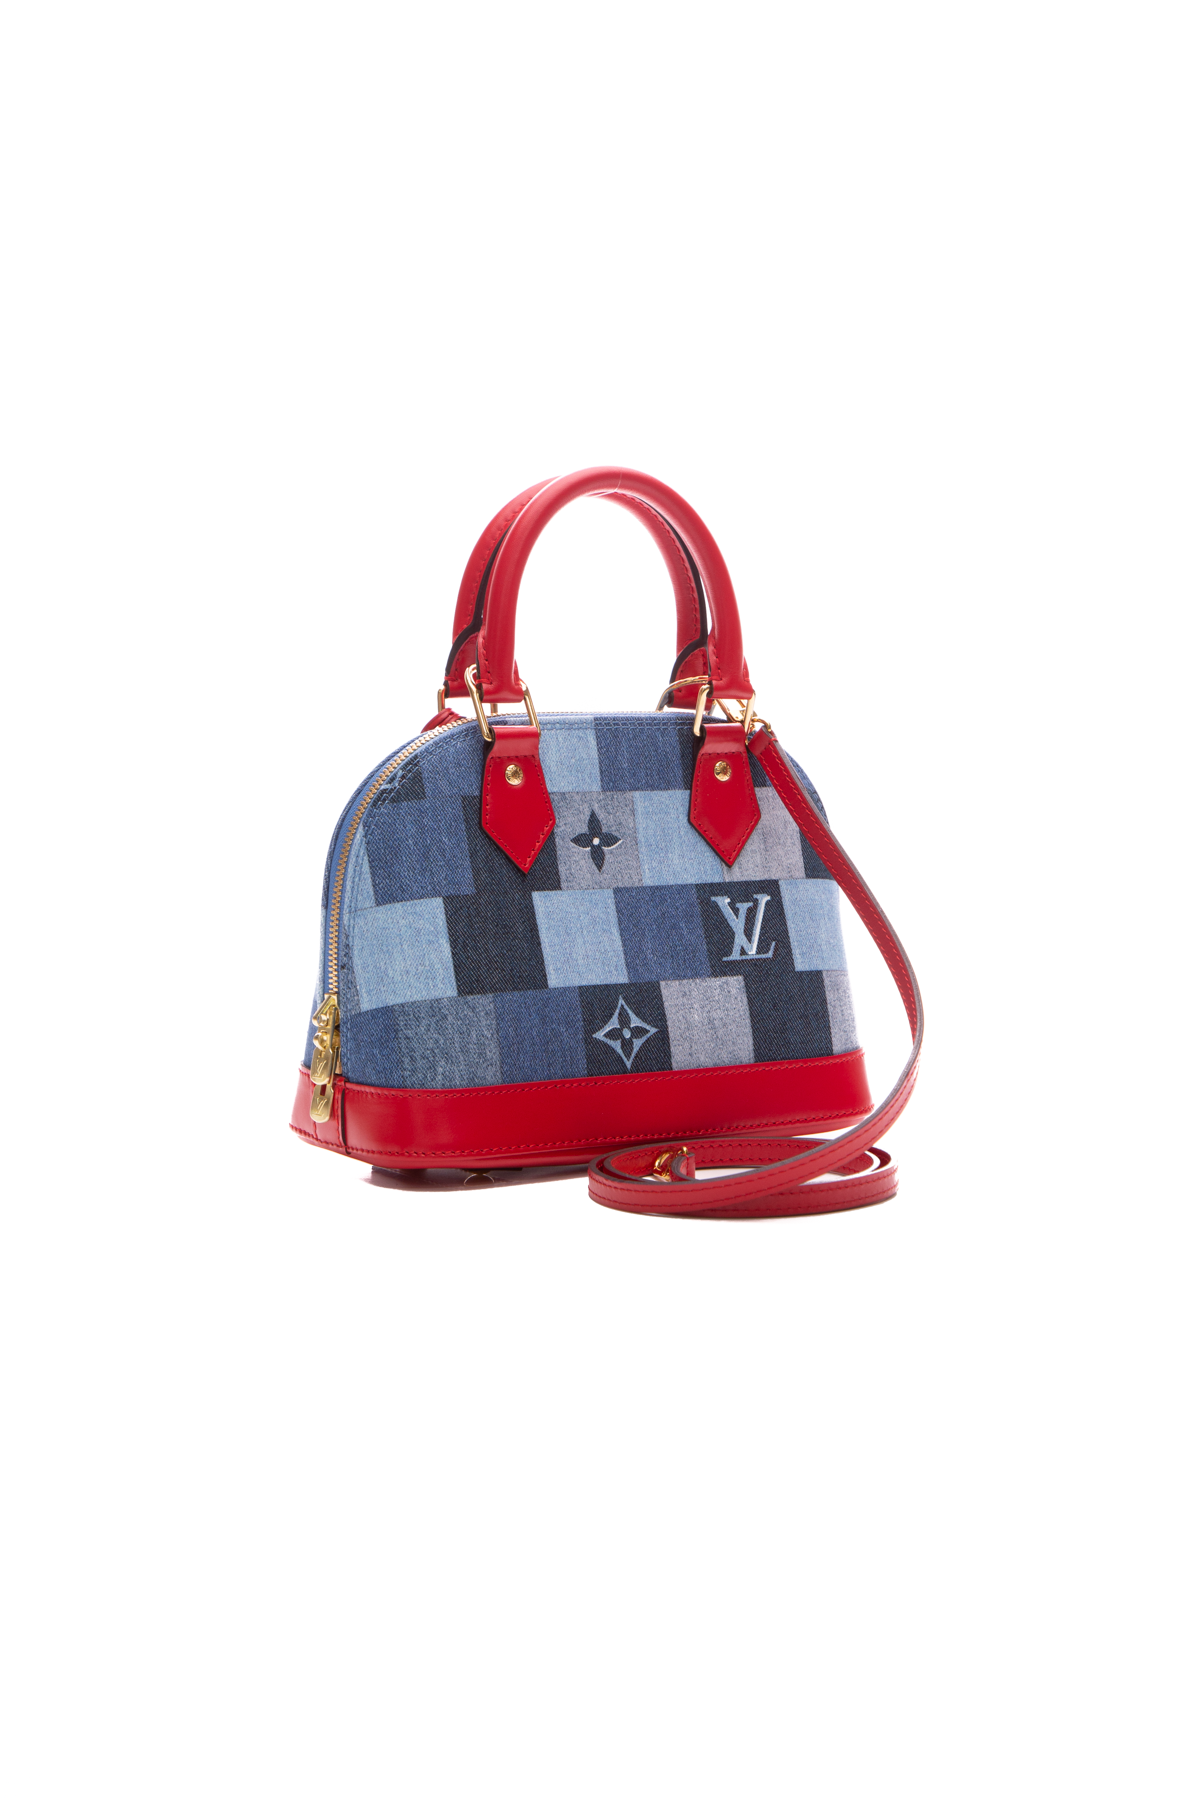 FWRD Renew Louis Vuitton Monogram Patchwork Denim Bowling Bag in Blue | FWRD